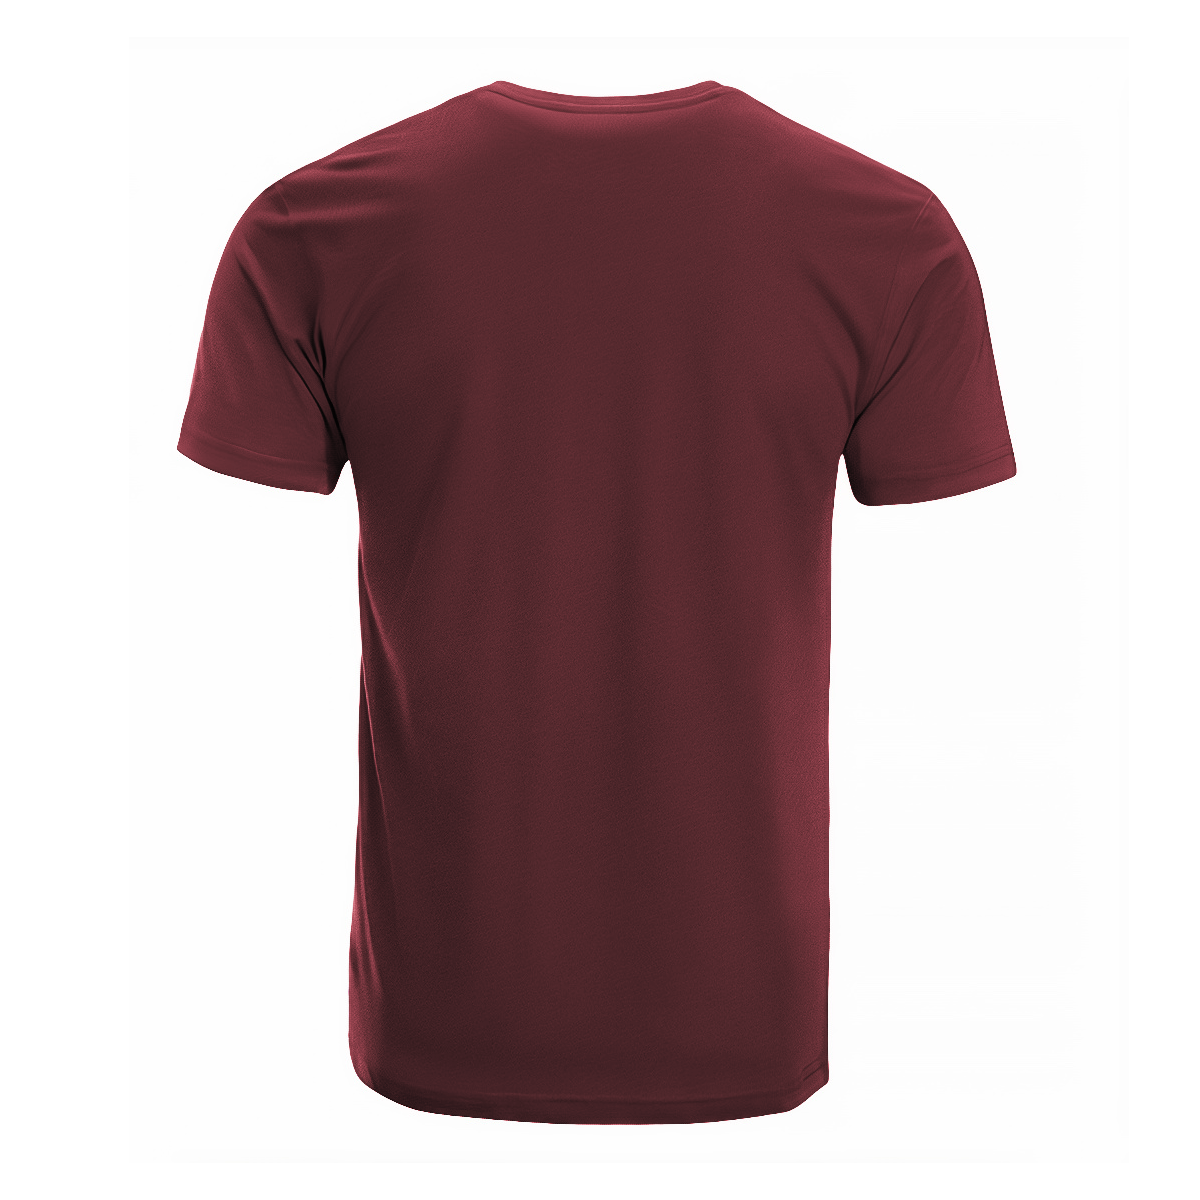 Darroch Tartan Crest T-shirt - I'm not yelling style